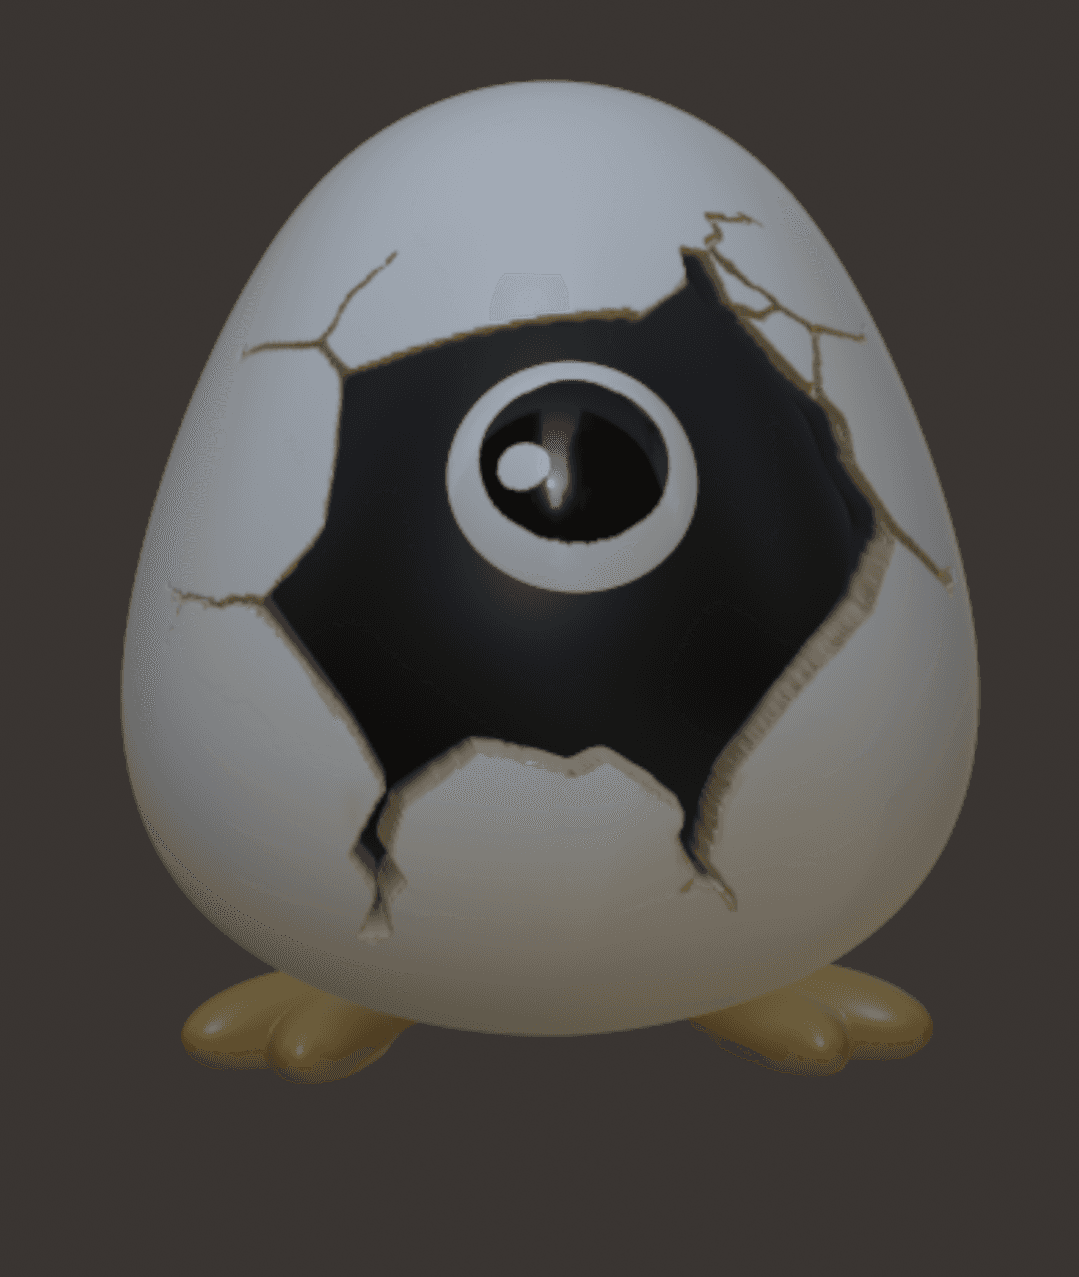 my son, the egg 3d model